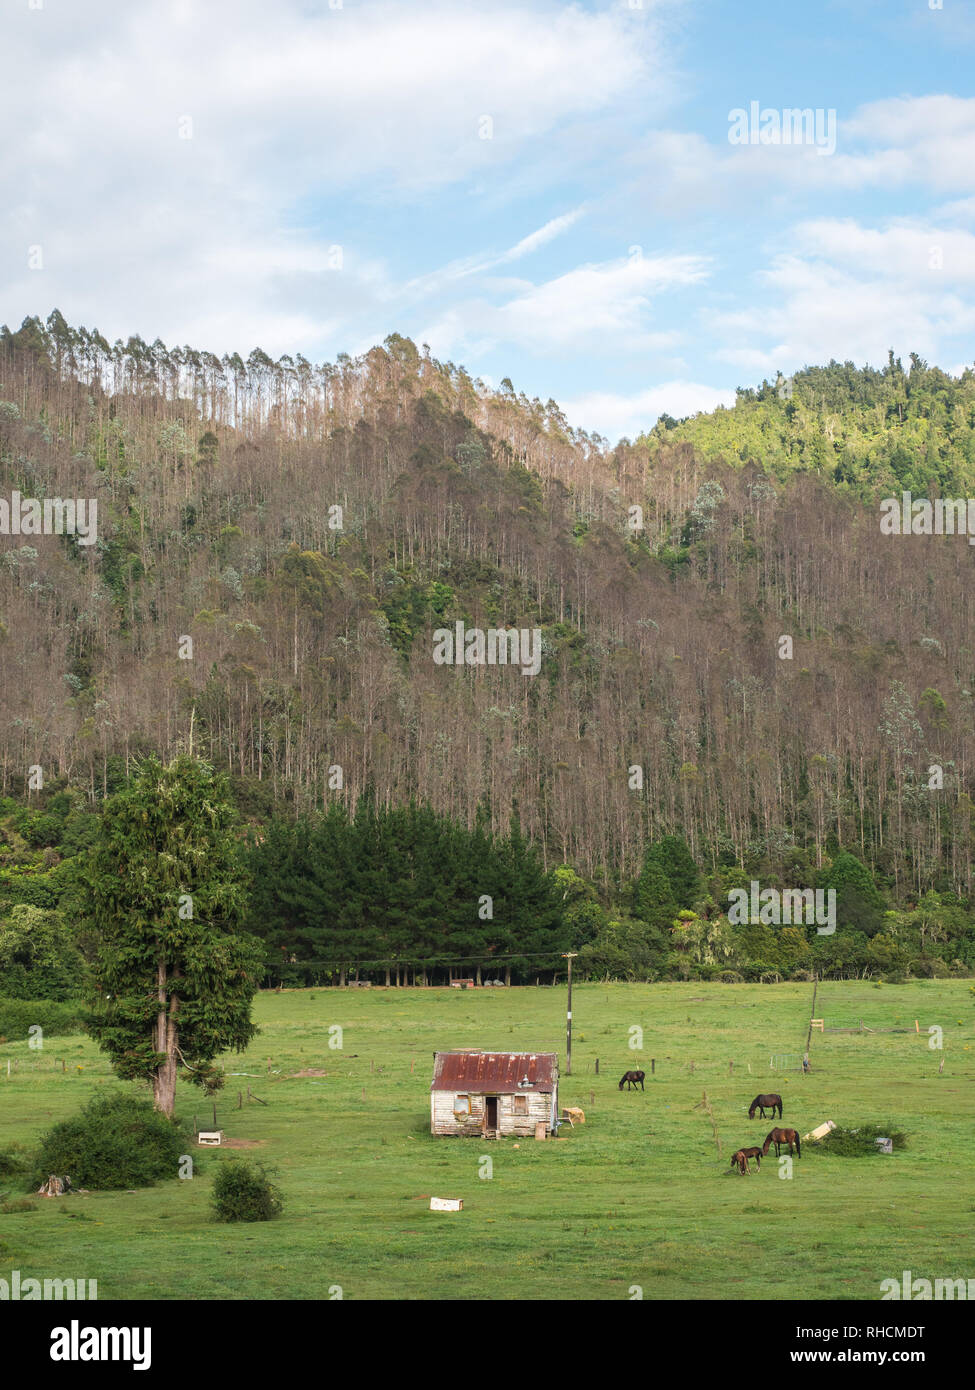 Abandoned derelict house, horses grazing on grass flats, eucalyptus plantation forest growing on the hills, Otekura, Ruatahuna, Te Urewera New Zealand Stock Photo